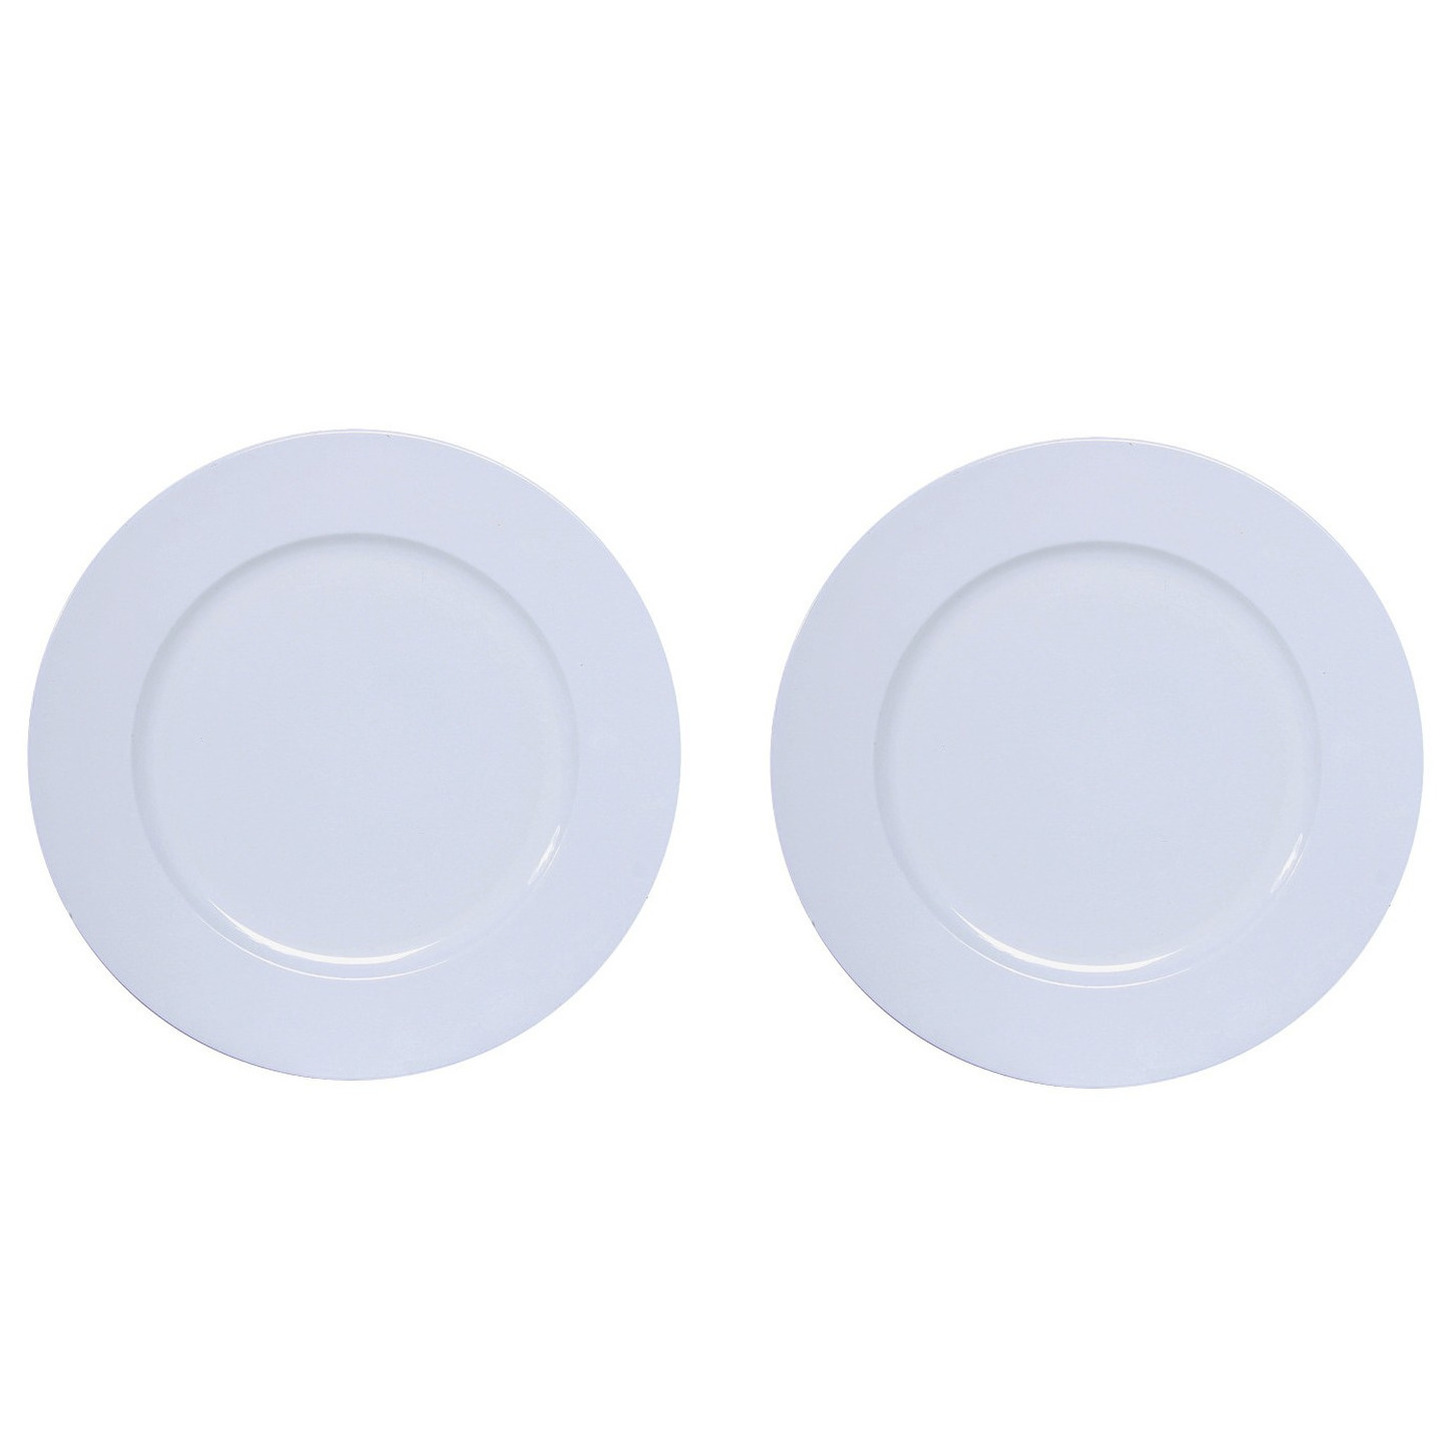 8x Ronde diner-kerstdiner borden-onderborden wit glimmend 33 cm